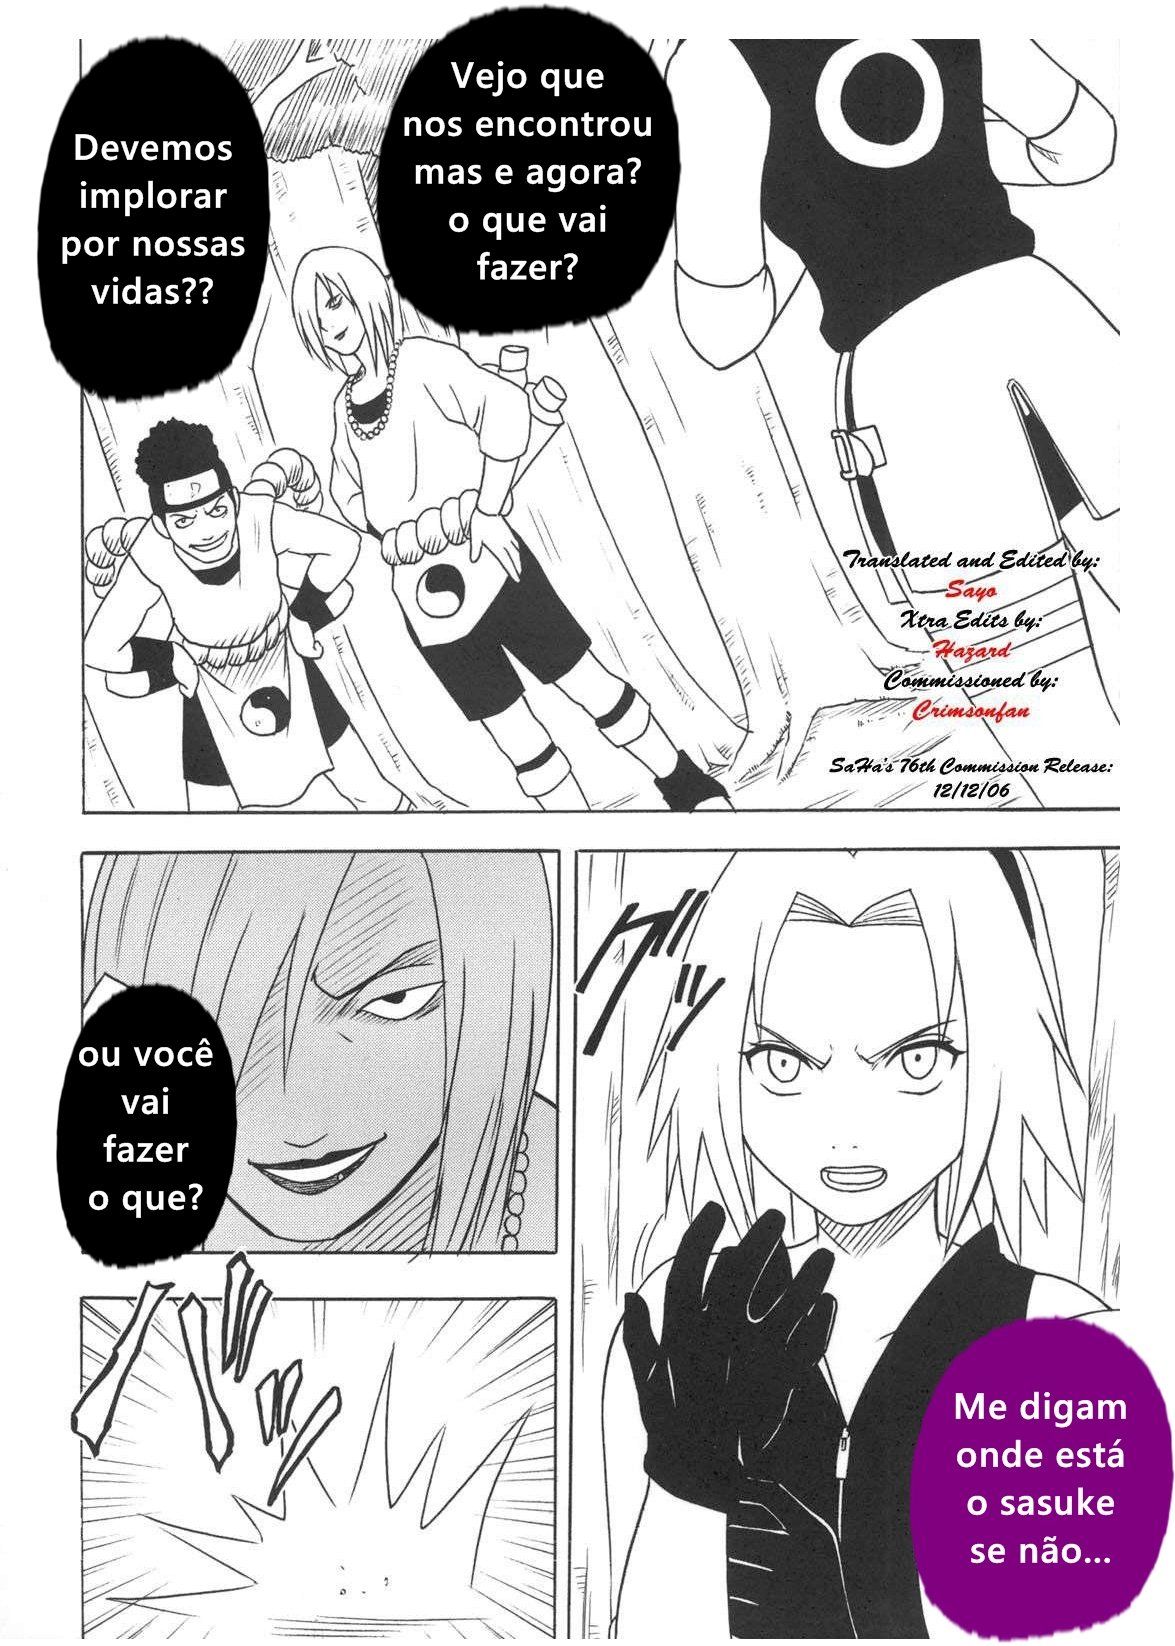 Sakura na mão do inimigo – Naruto XXX